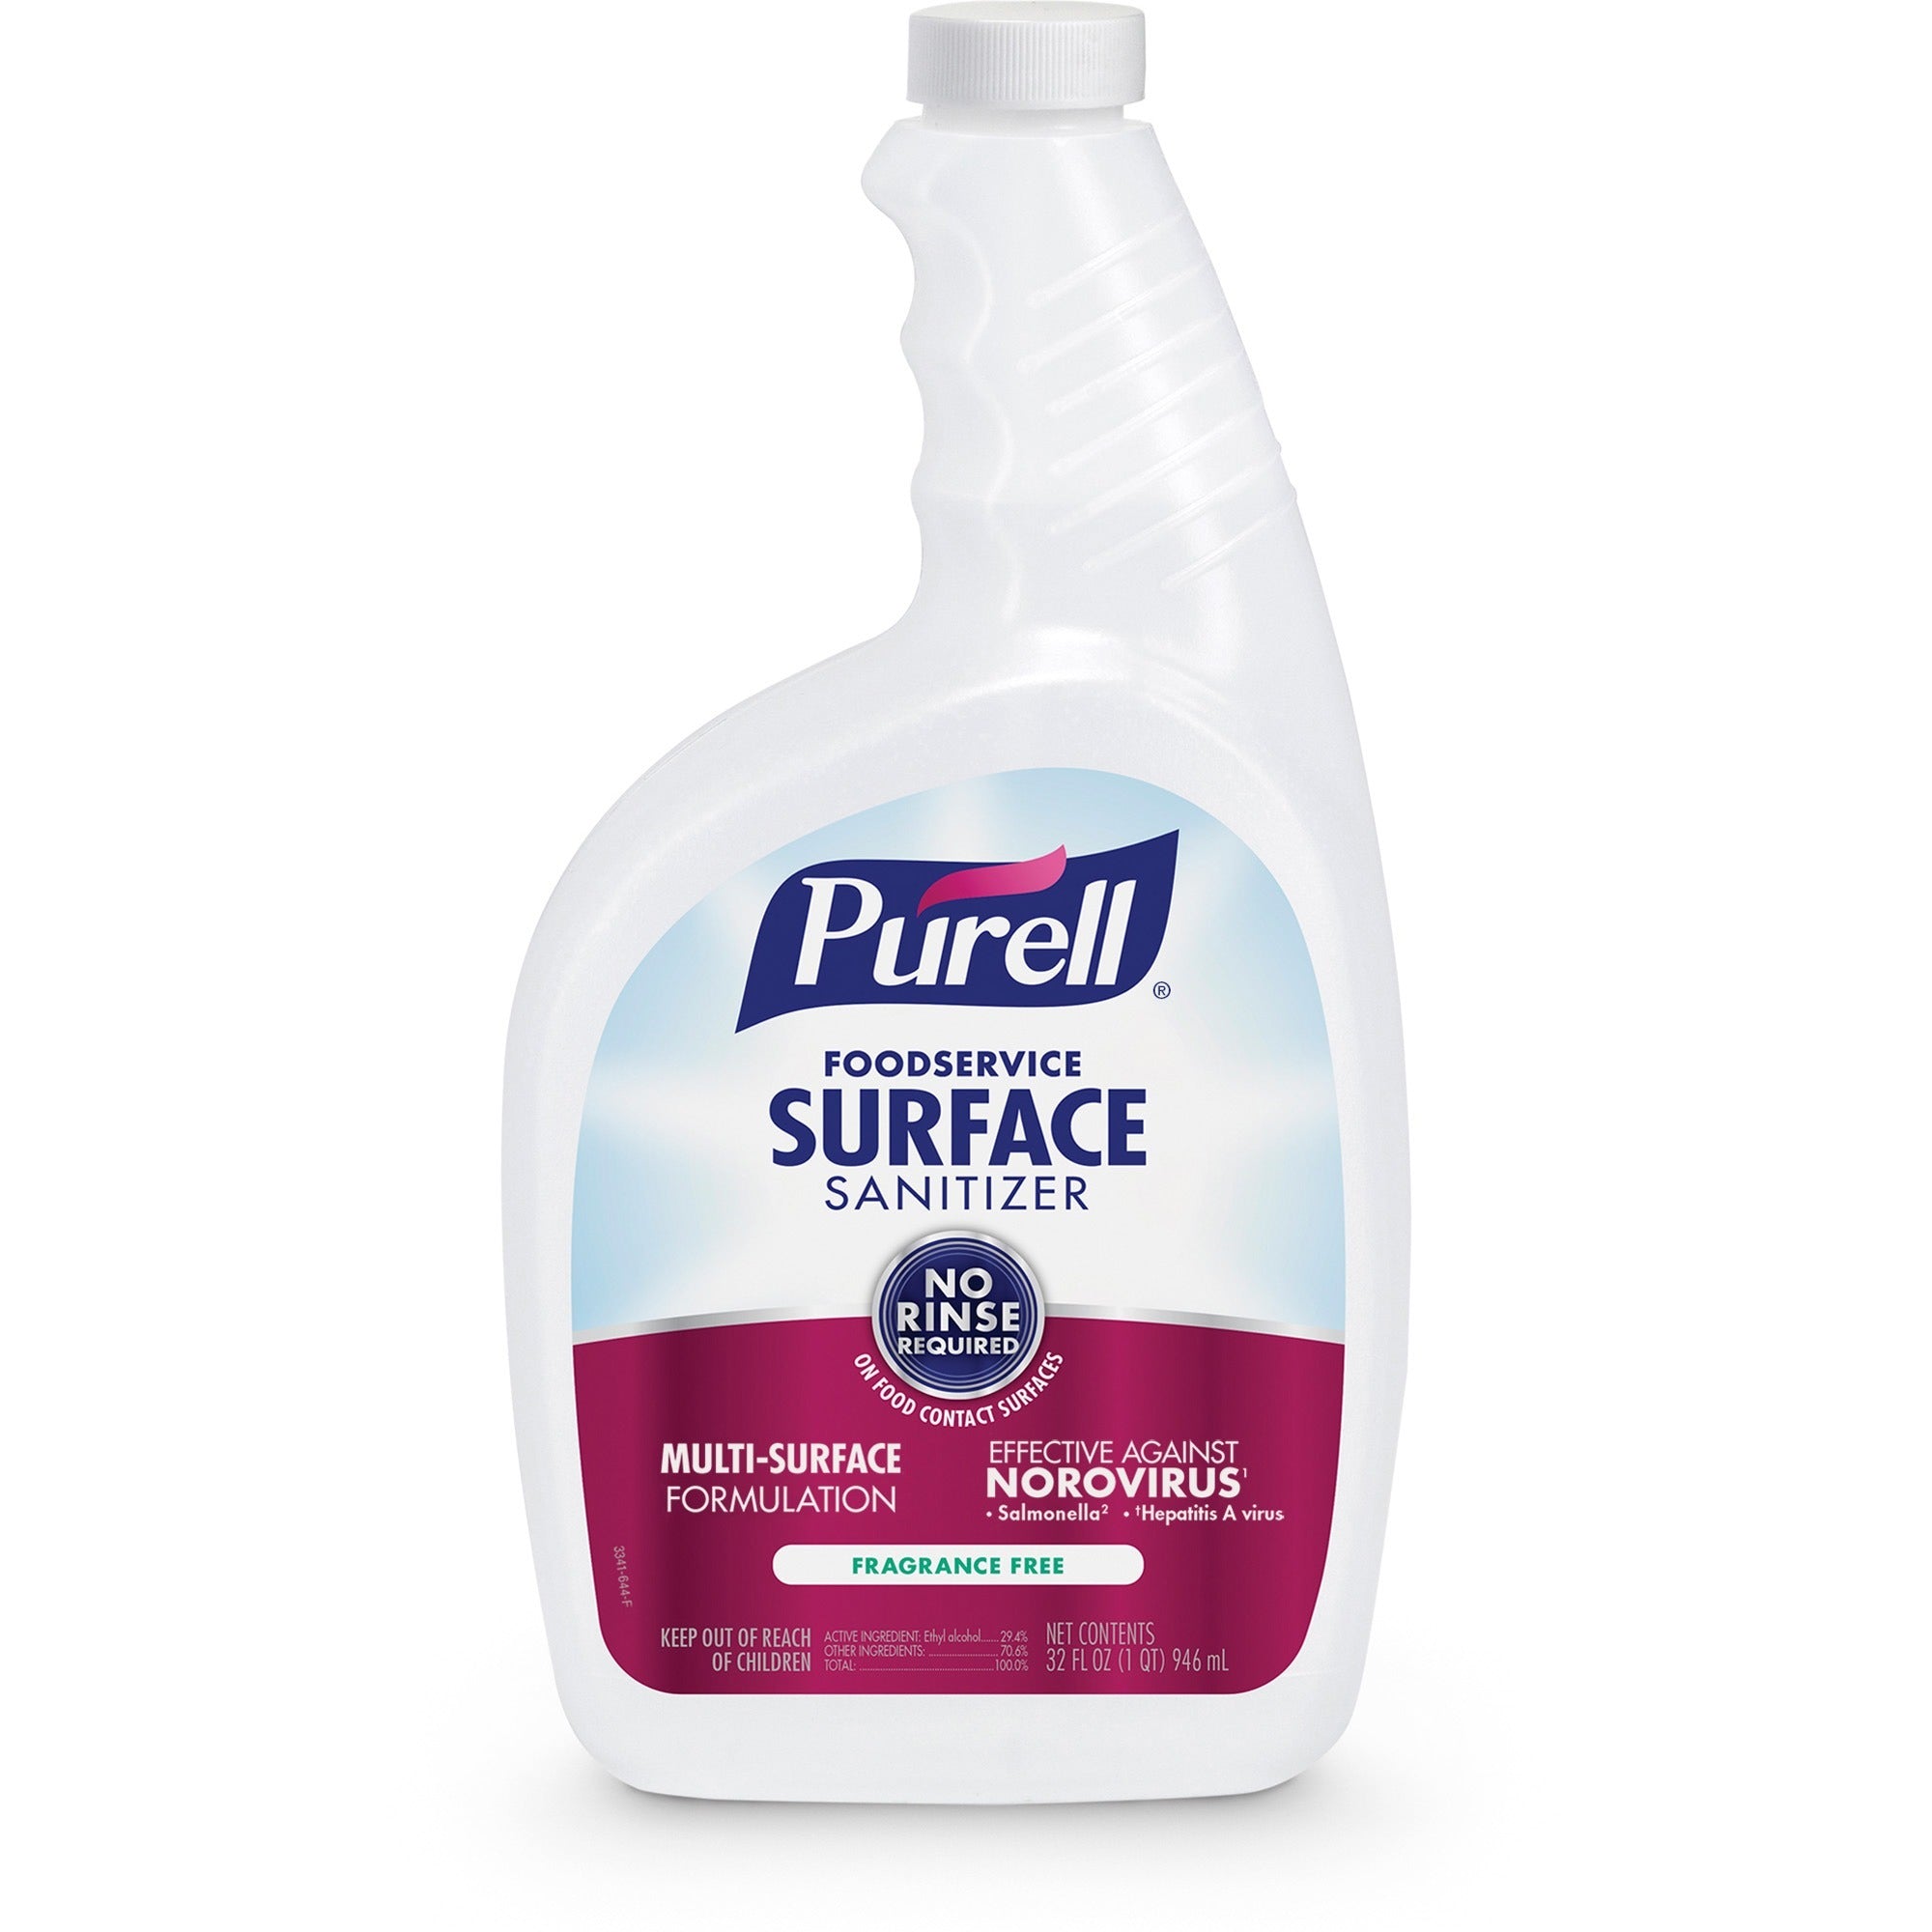 purell-foodservice-surface-sanitizer-32-fl-oz-1-quartspray-bottle-6-carton-rinse-free-fragrance-free-clear_goj334106 - 2